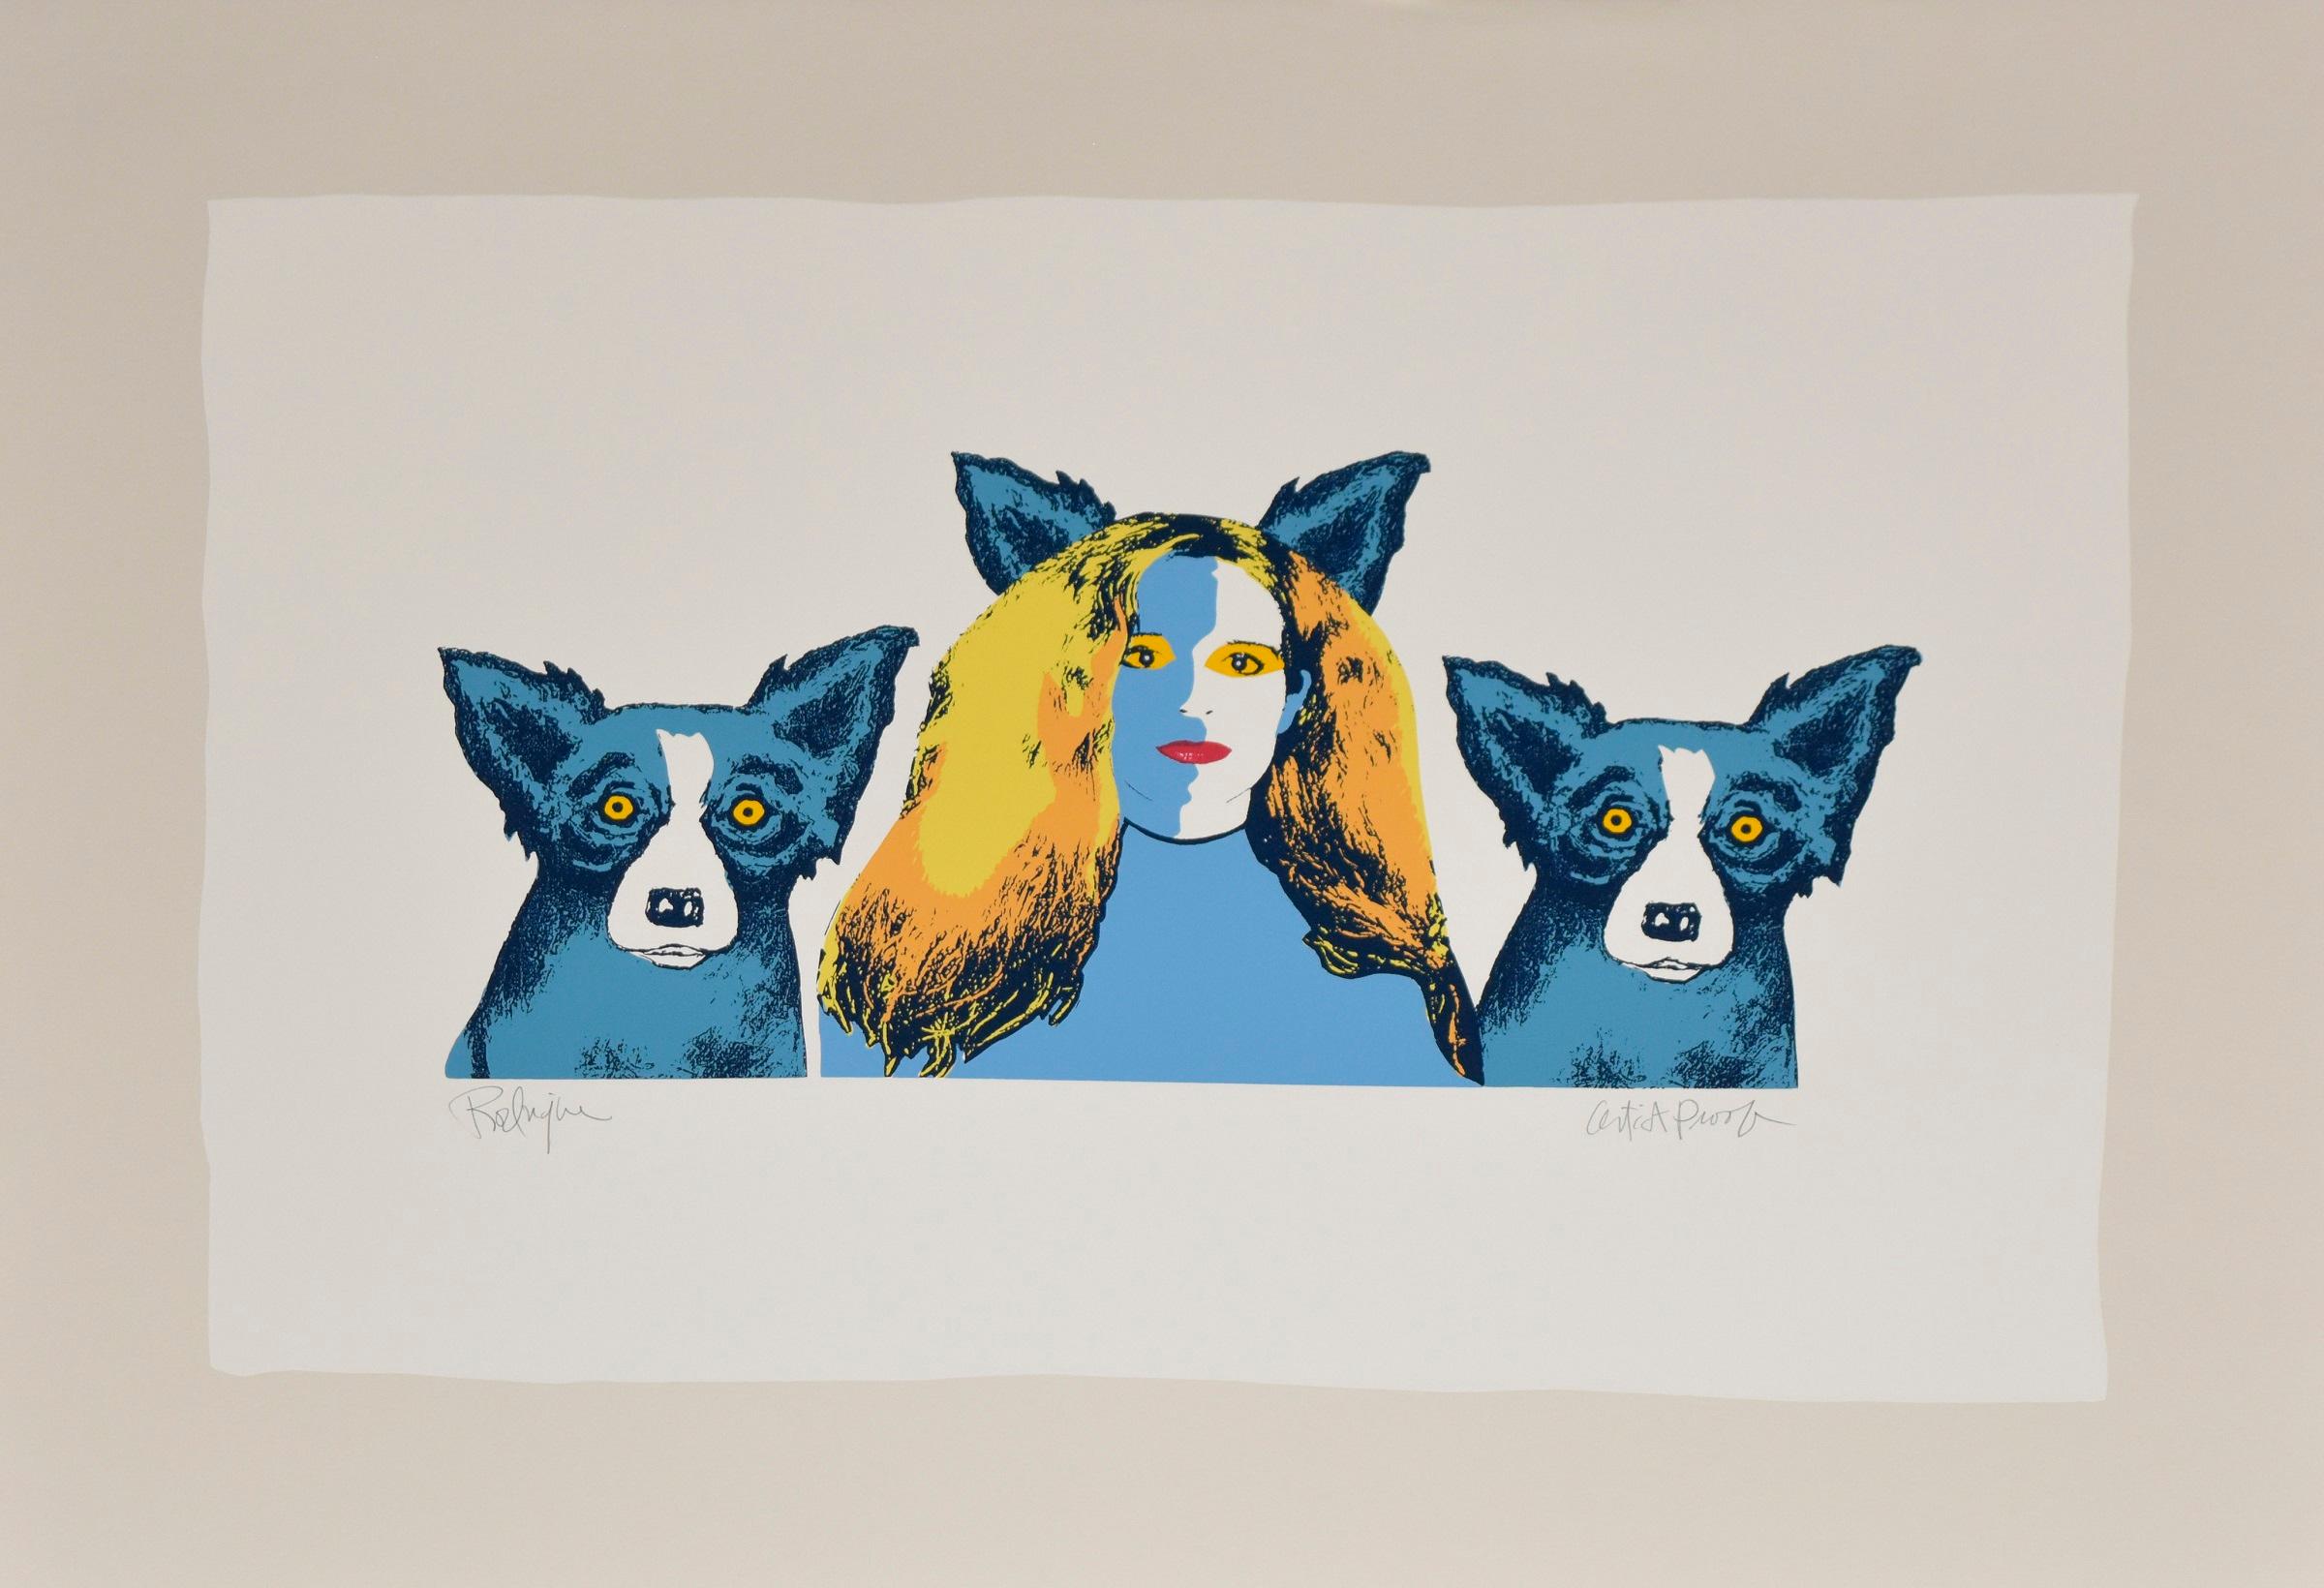 George Rodrigue Animal Print - Soul Mates - Variant I - Signed Silkscreen Print - Blue Dog